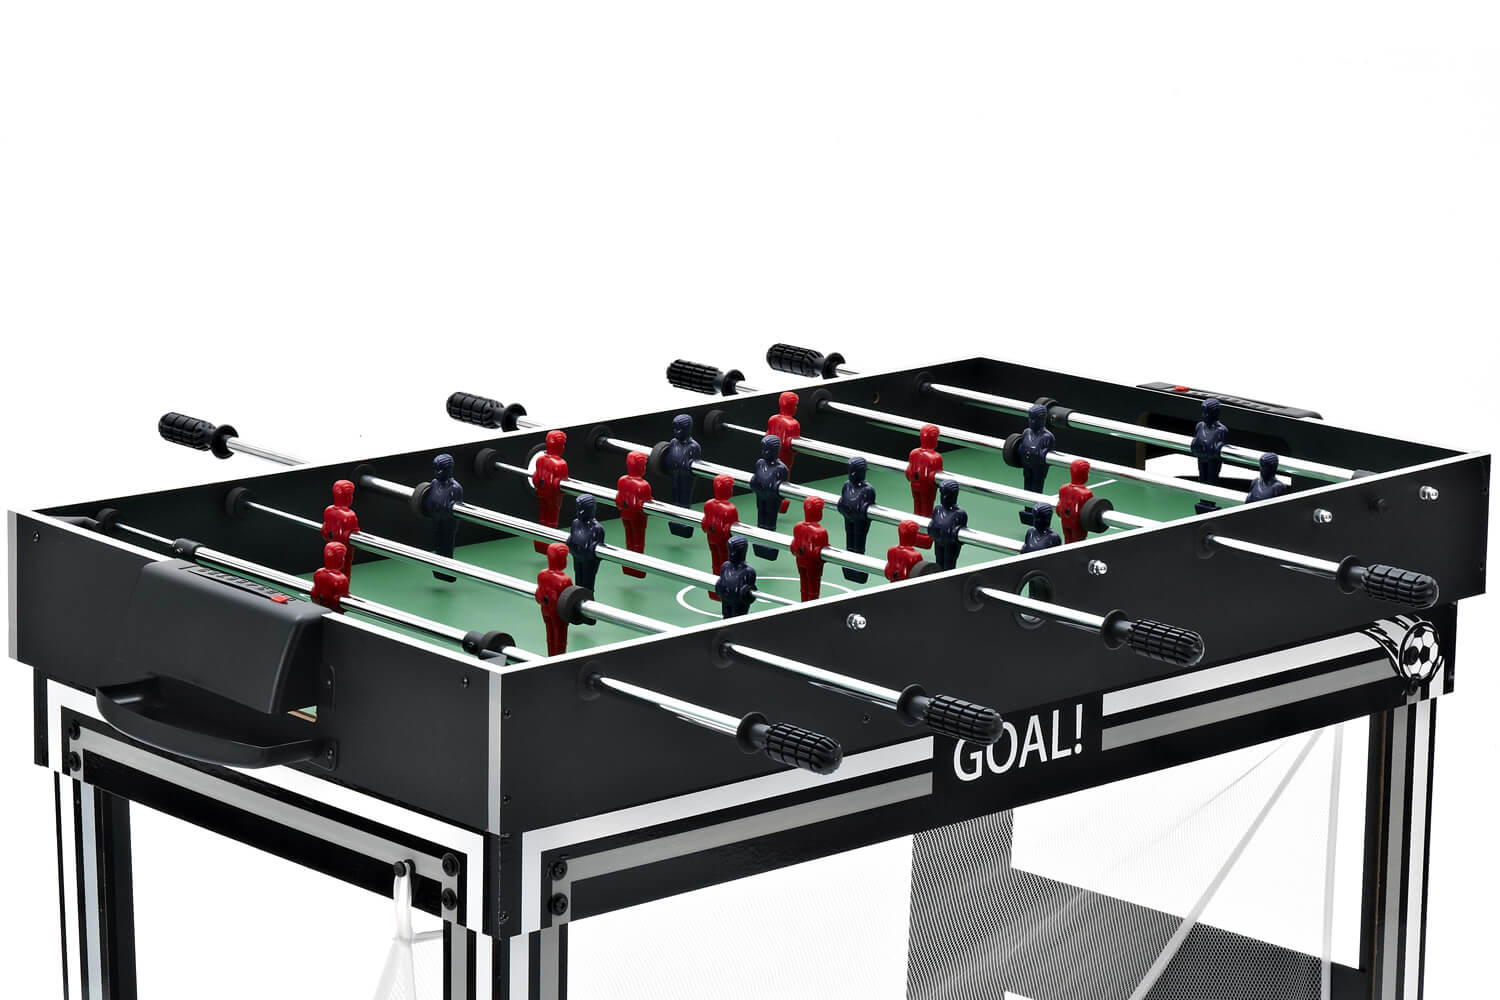 Tekscore Goal 21-in-1 4ft Multi Games Table  Multi game table, Table games,  Goals football